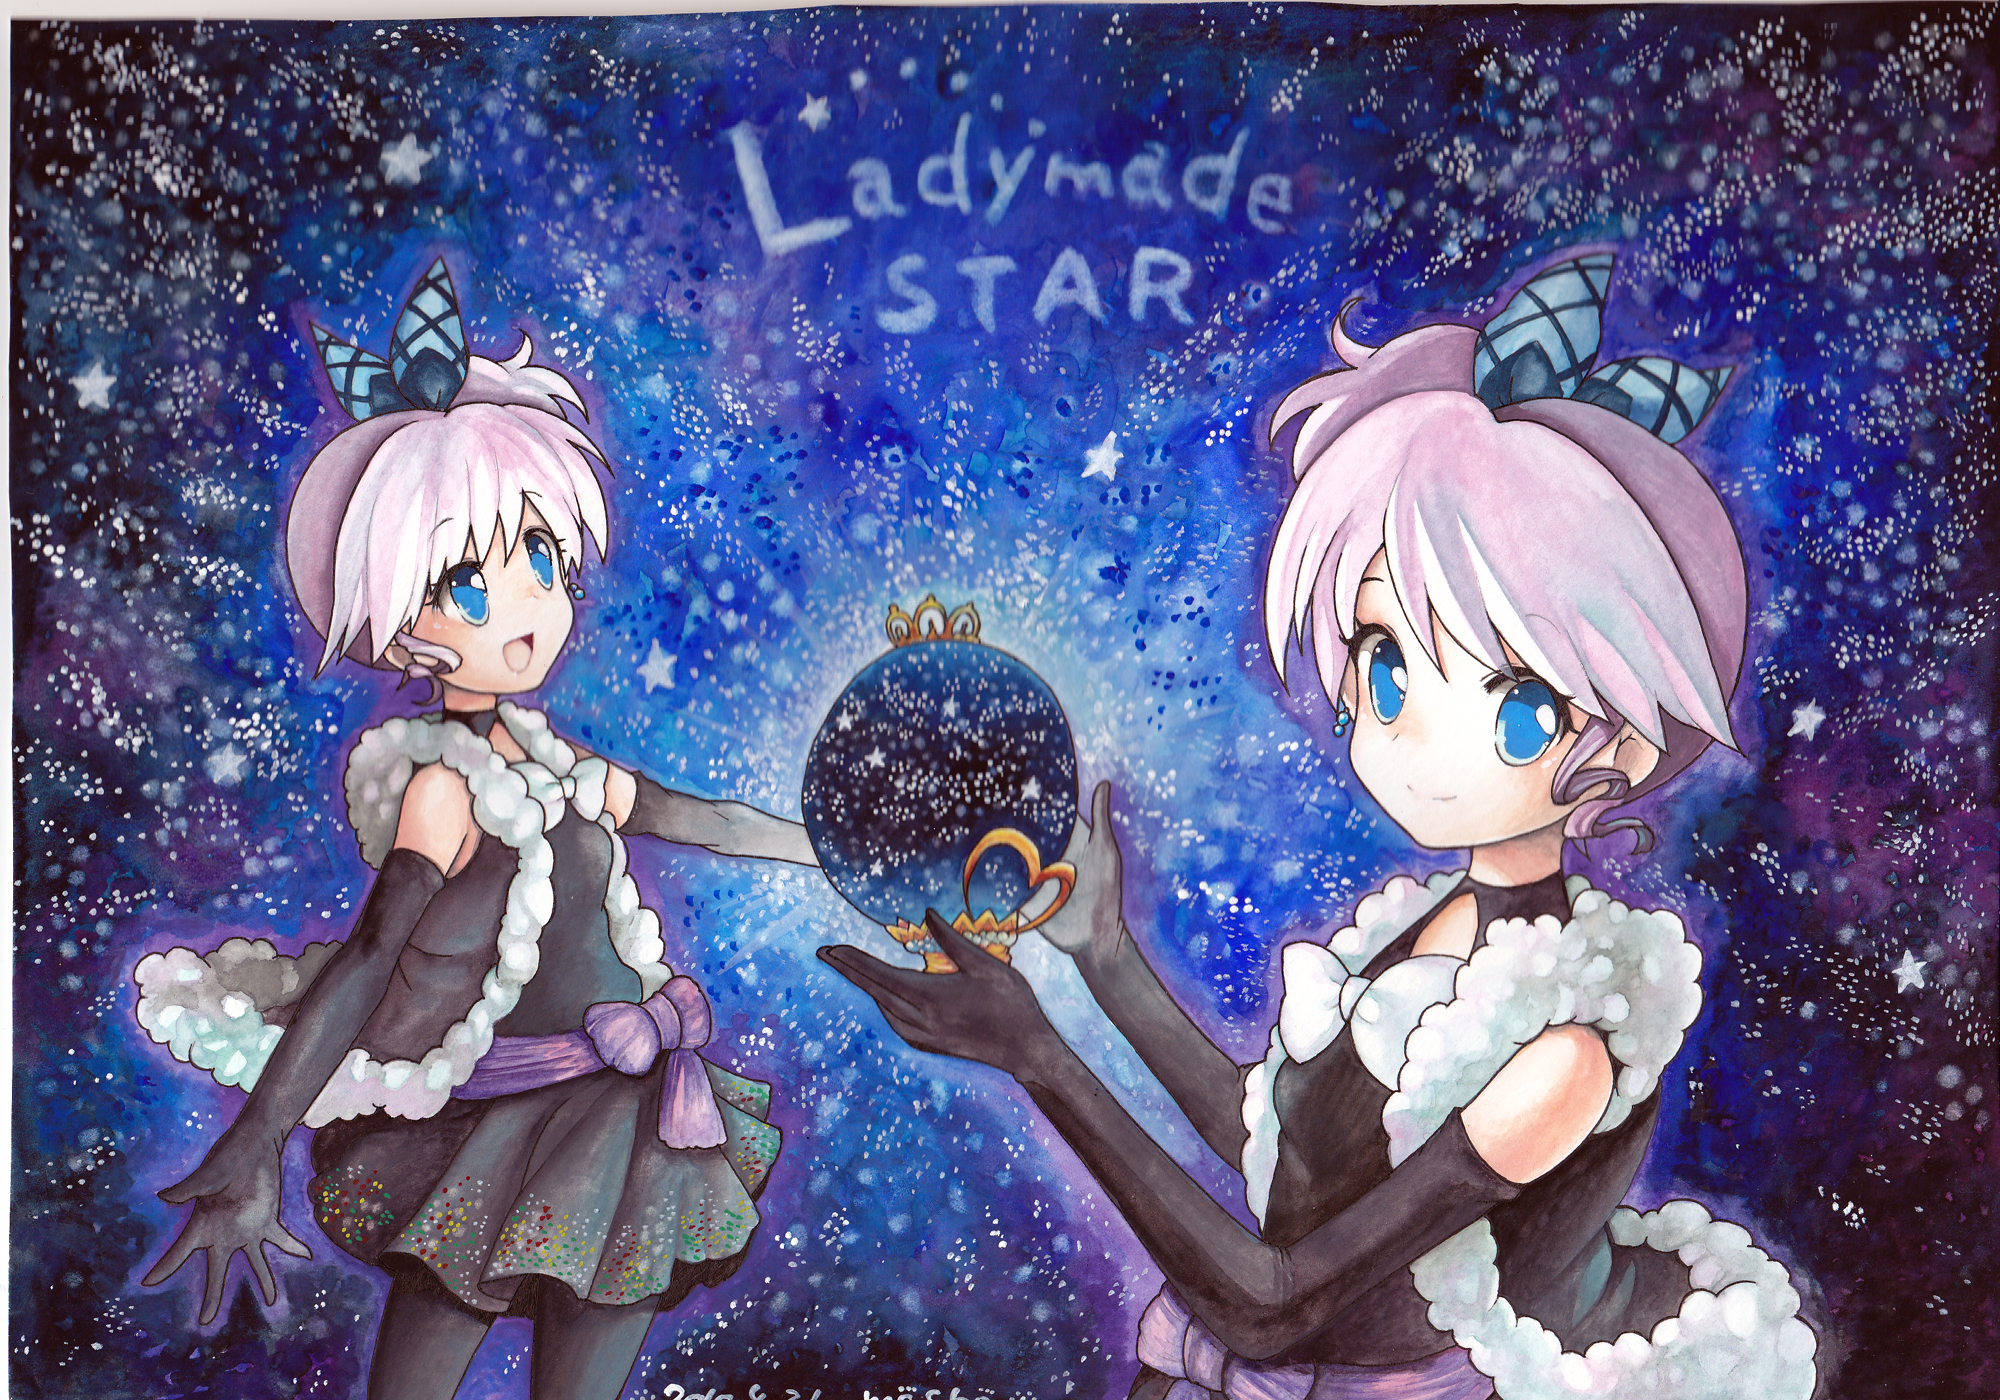 Ladymade STAR插画图片壁纸